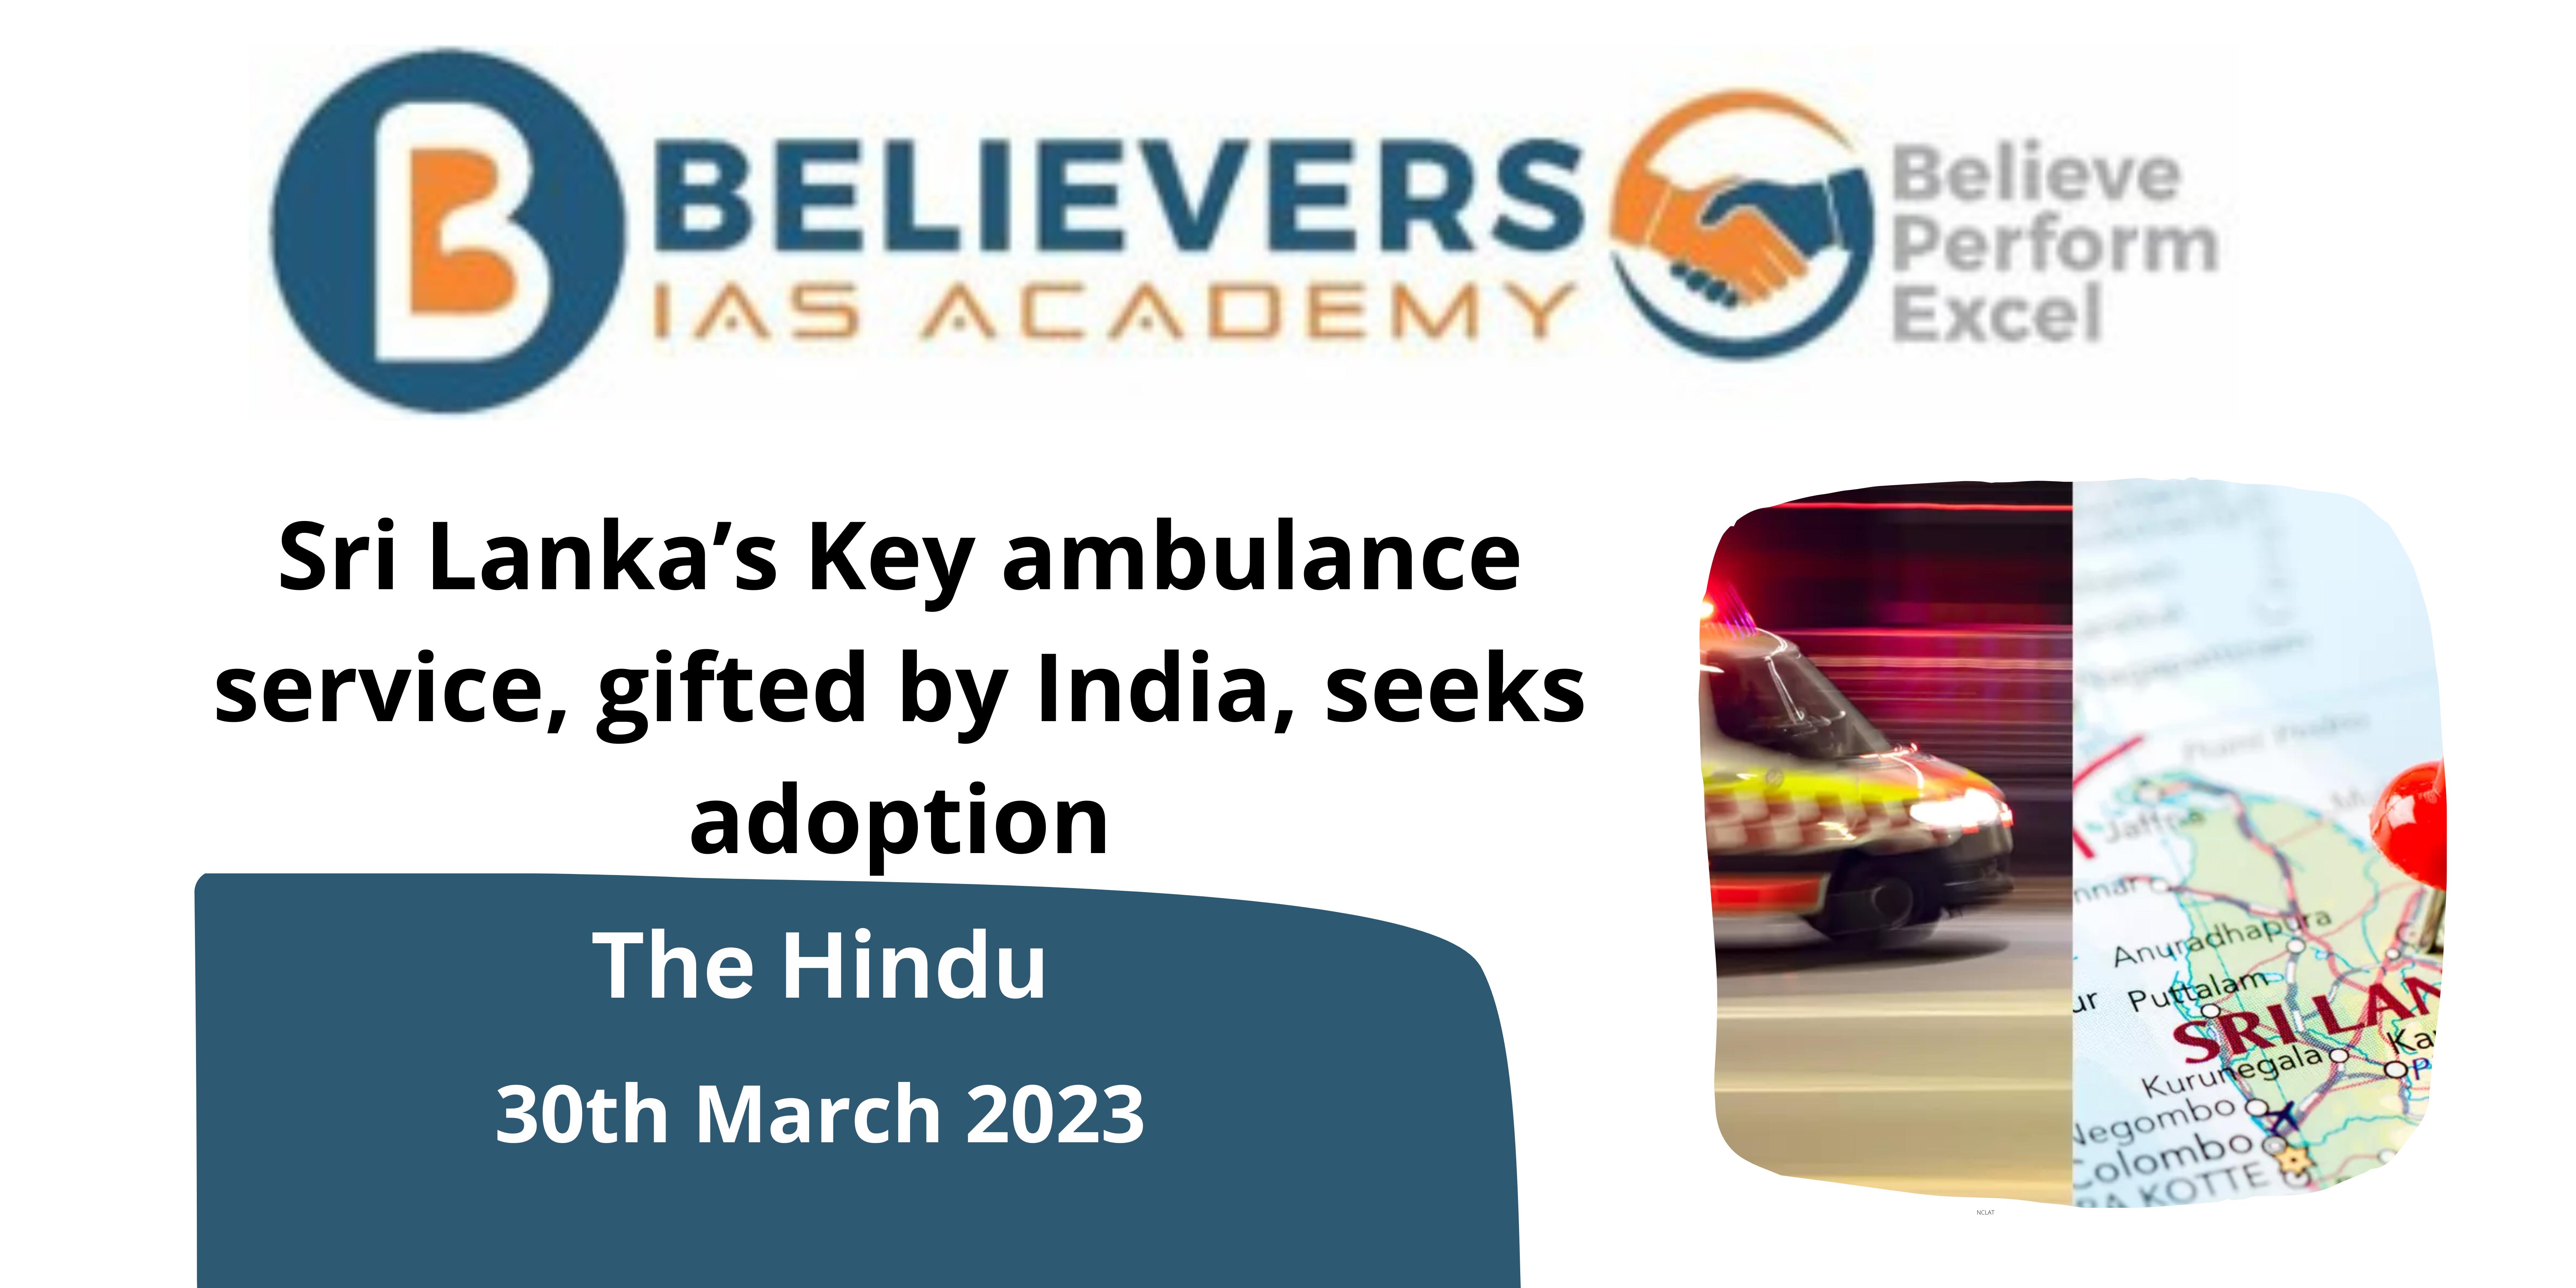 Sri Lanka’s Key ambulance service, gifted by India, seeks adoption